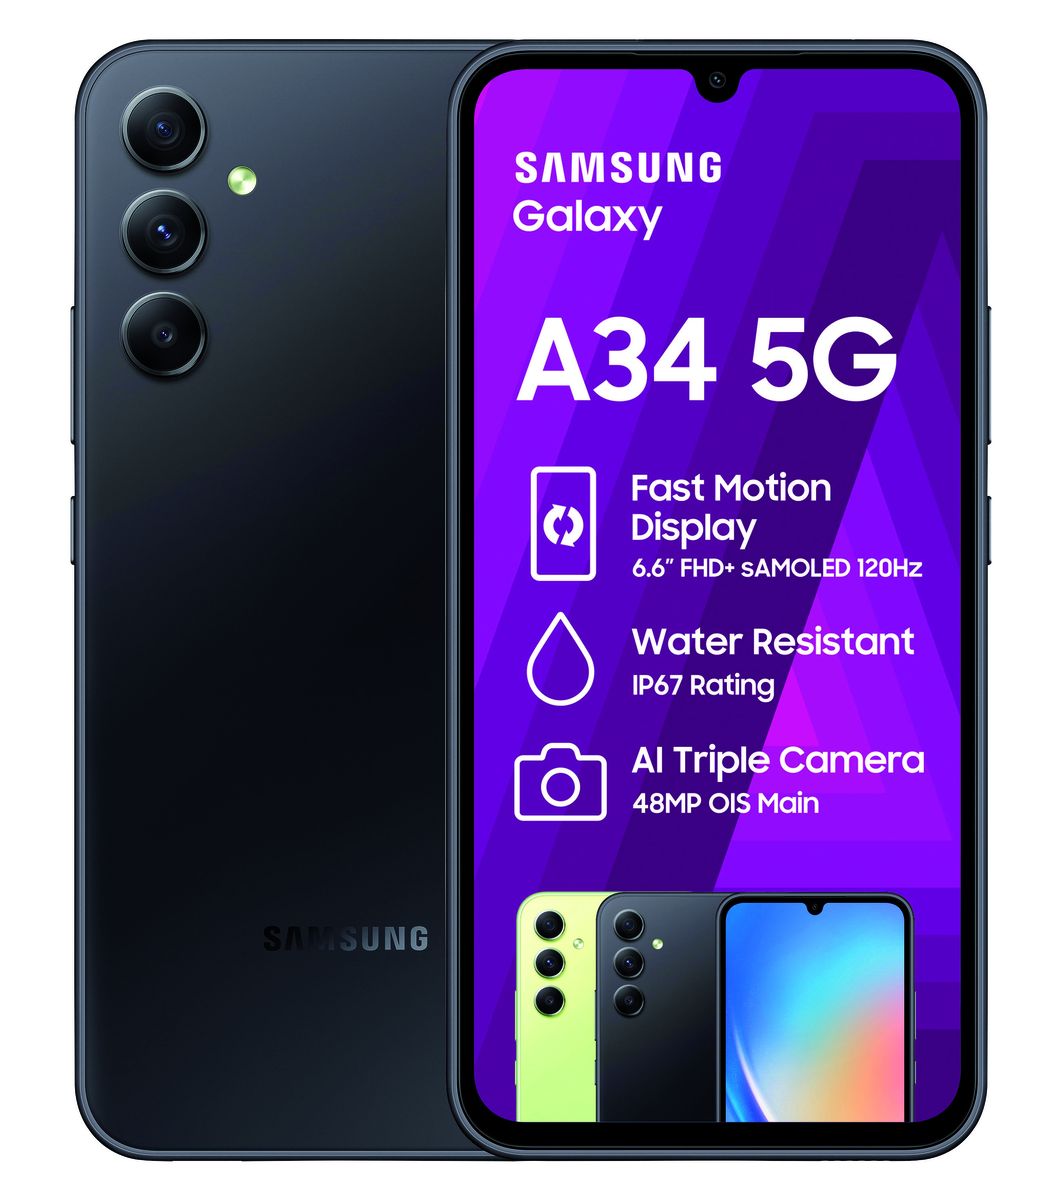 Samsung Galaxy A34 5G 128GB - Awesome Black | Shop Today. Get it ...